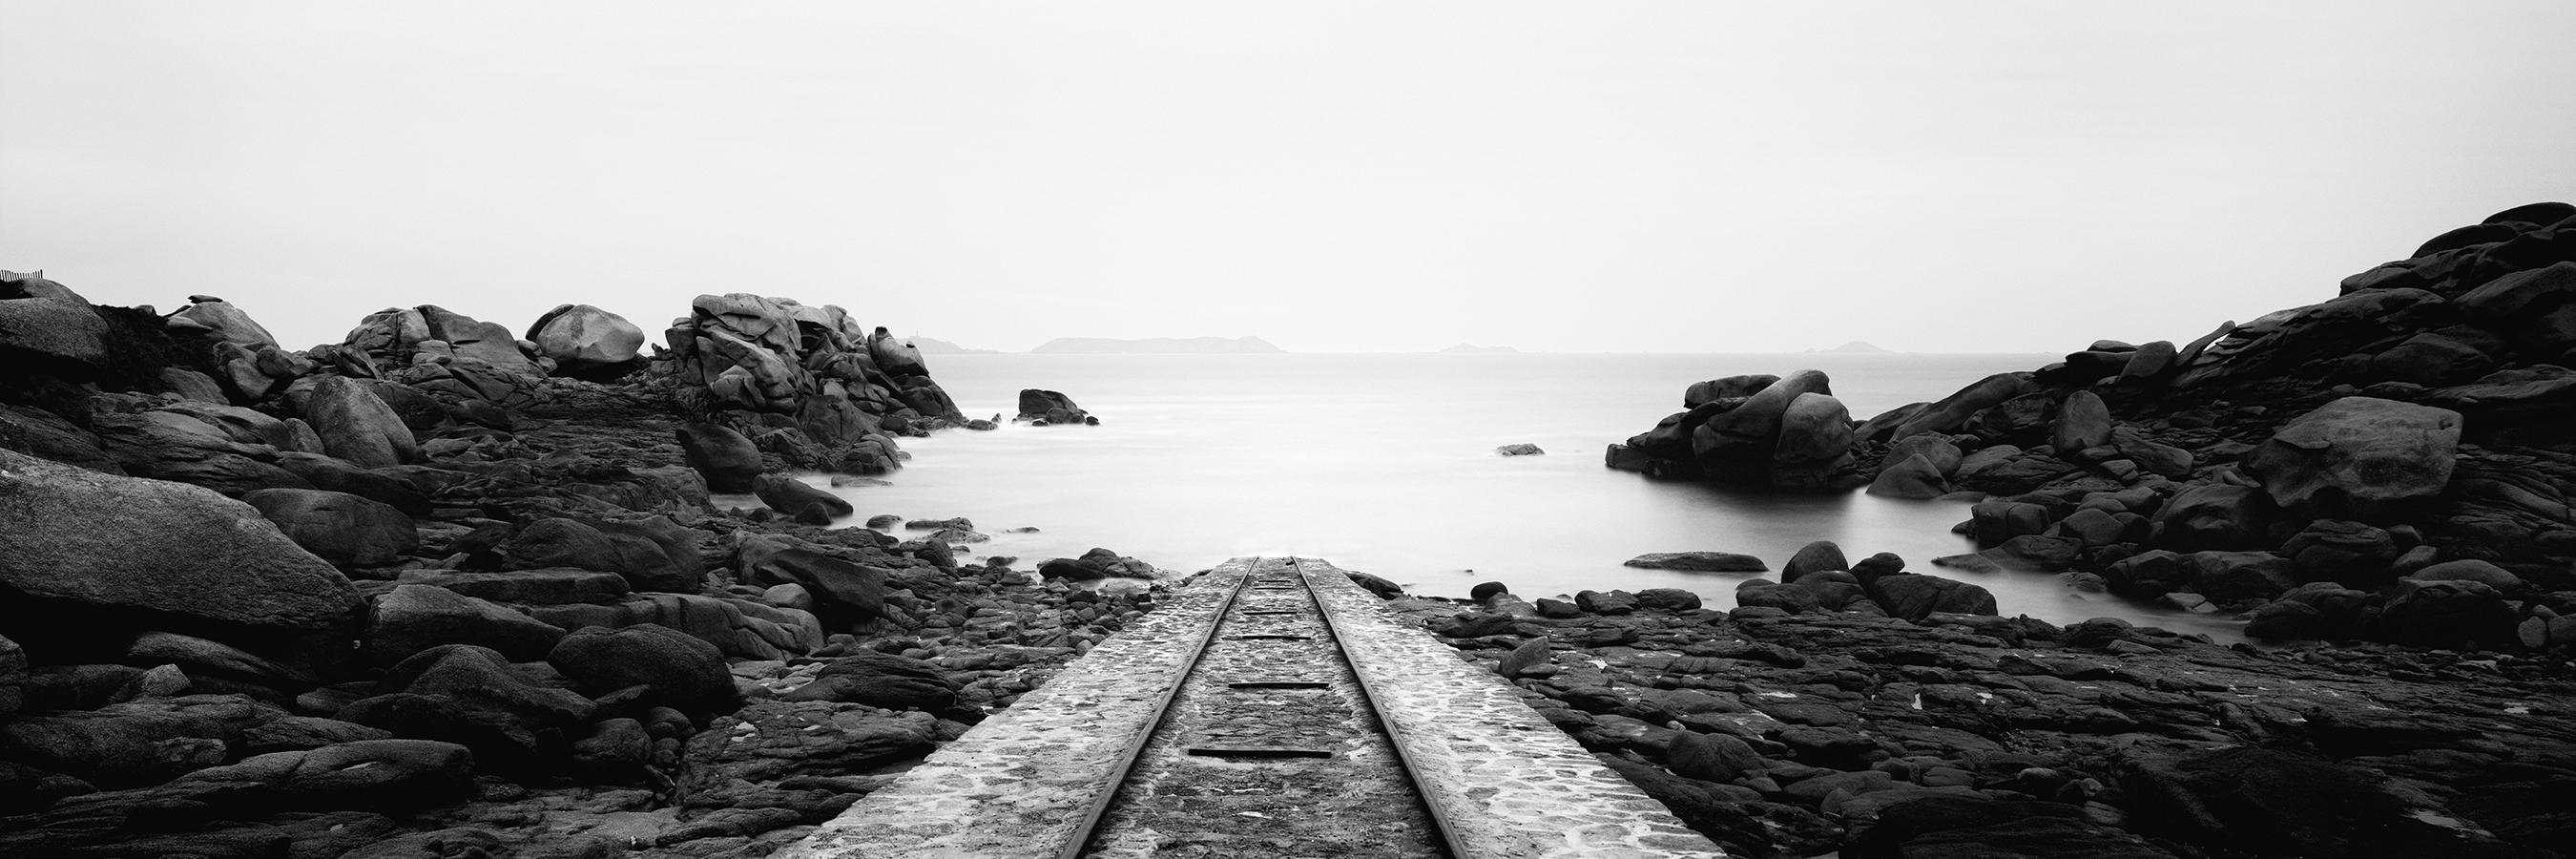 Gerald Berghammer Landscape Photograph - Into the Ocean railroad Atlantic bay France black white landscape photography